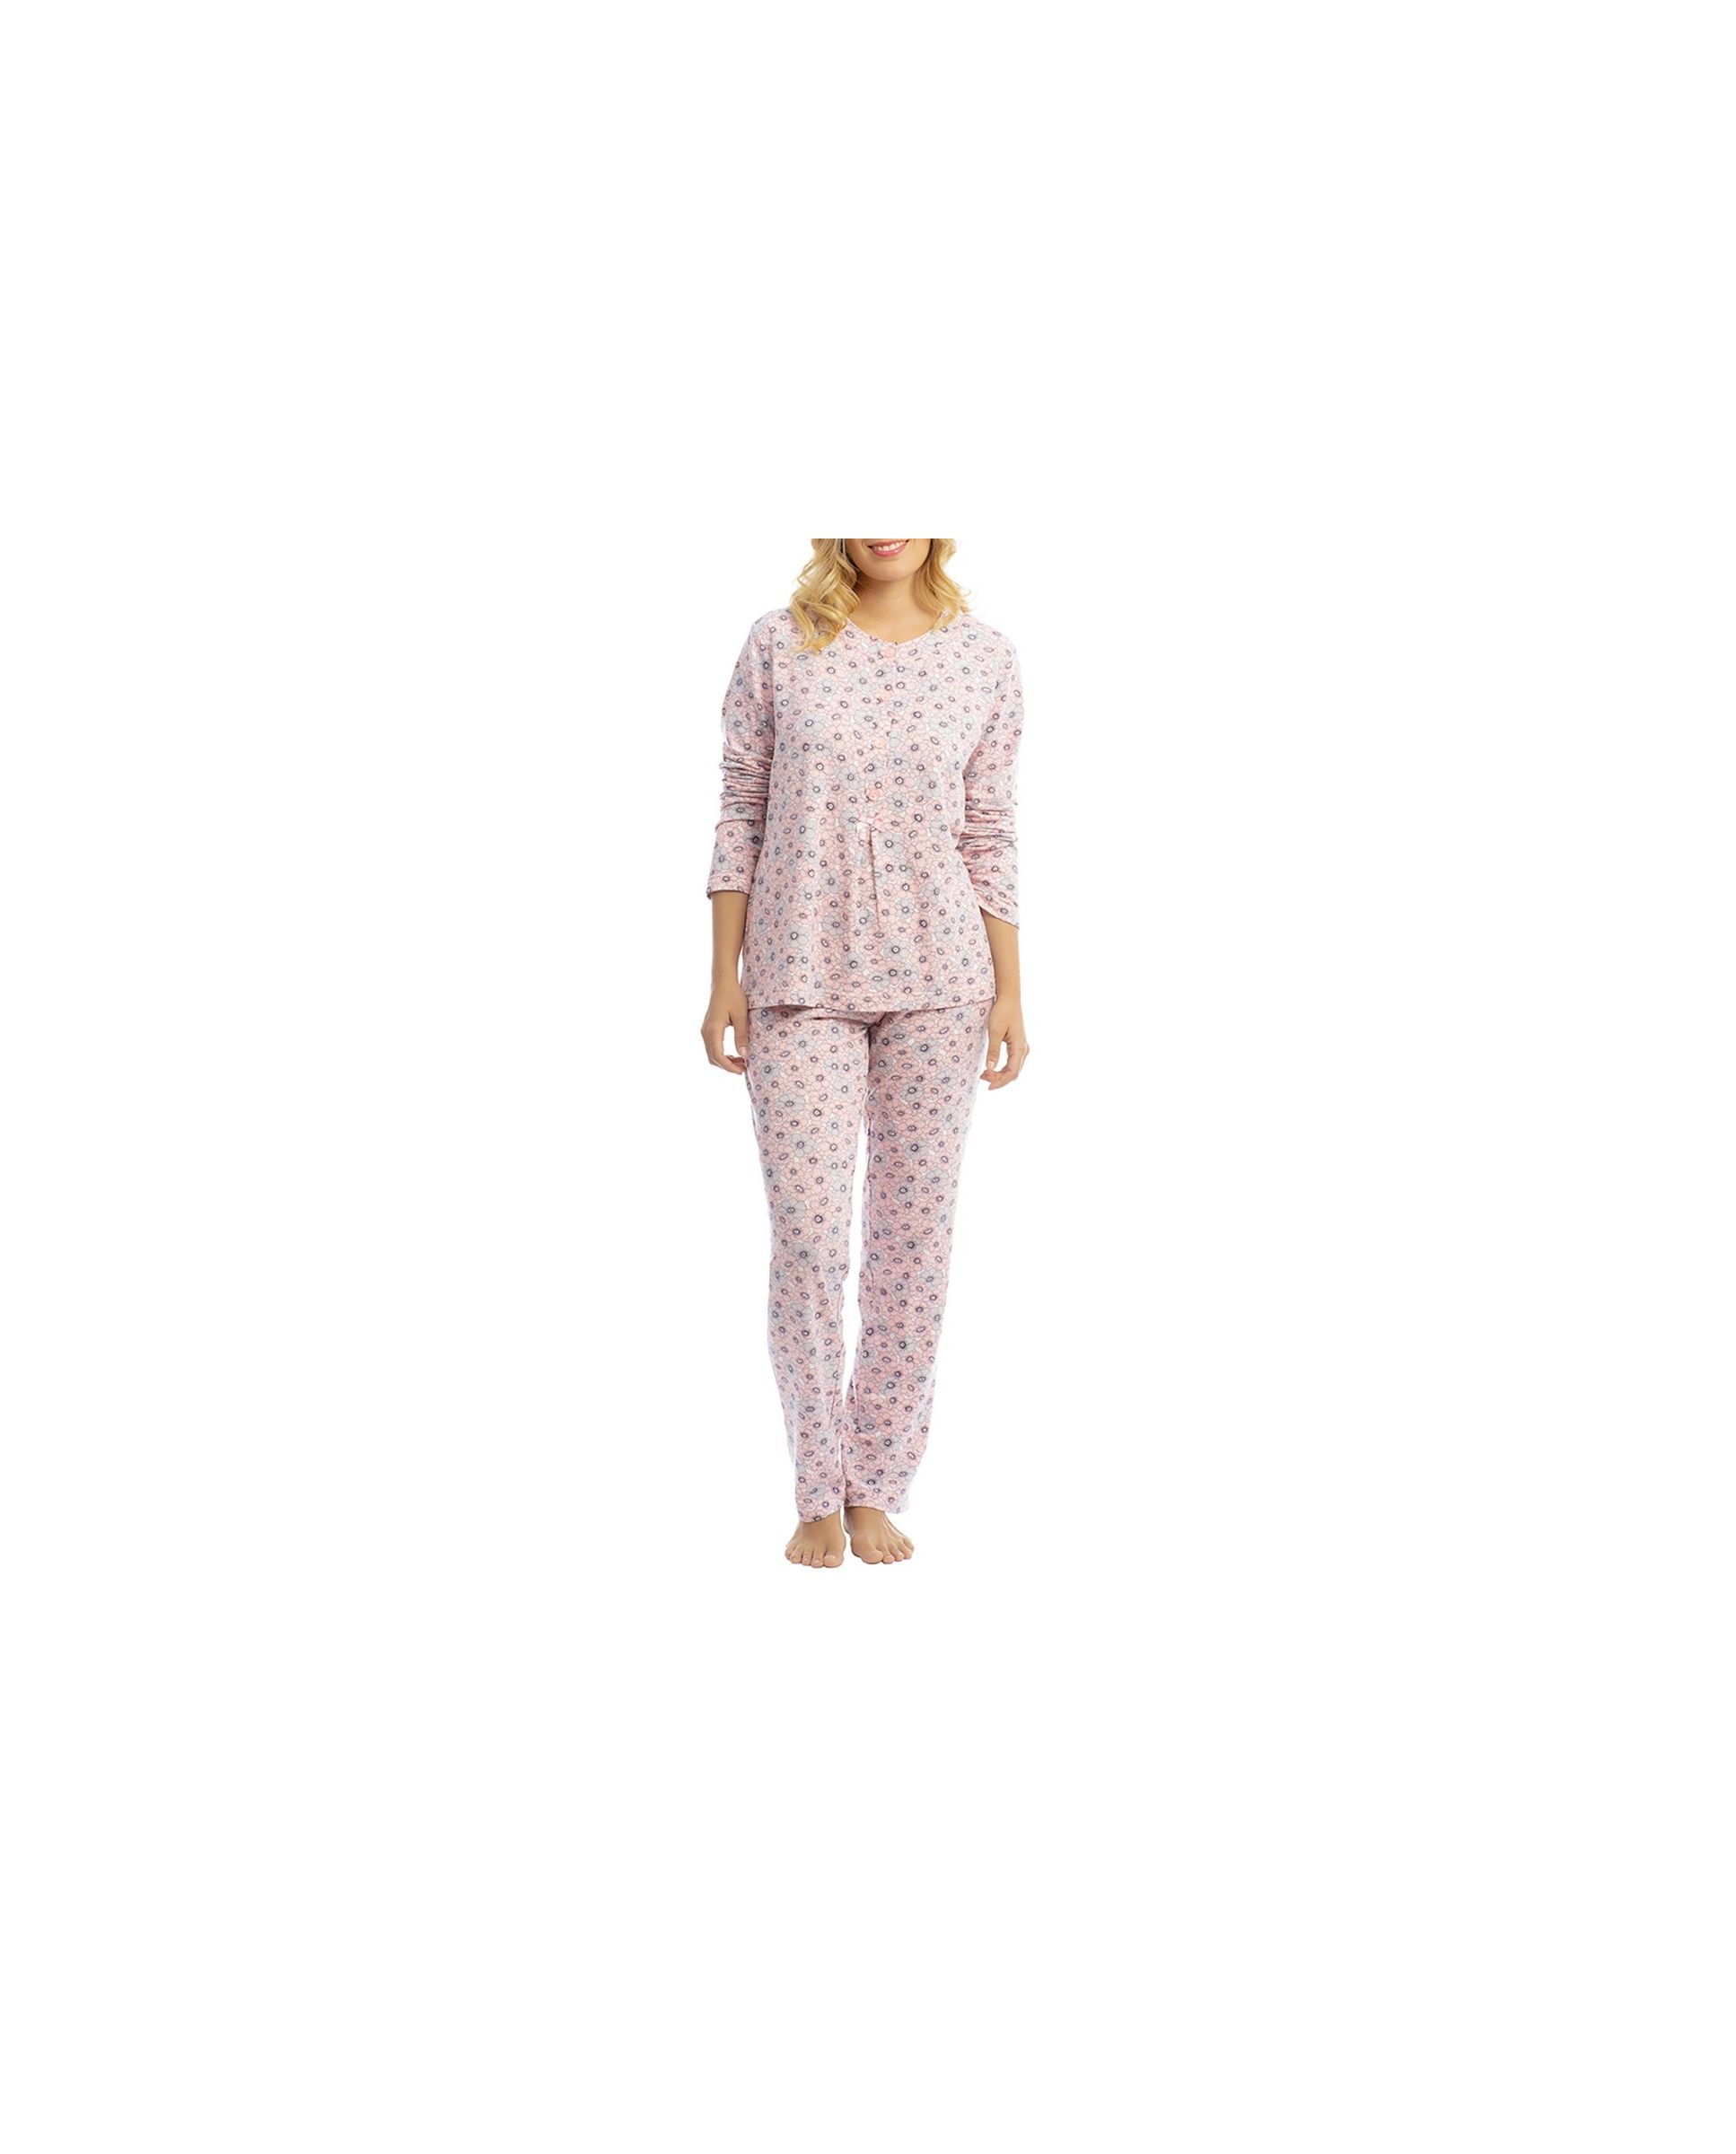 Women's winter pyjamas with pink flowers